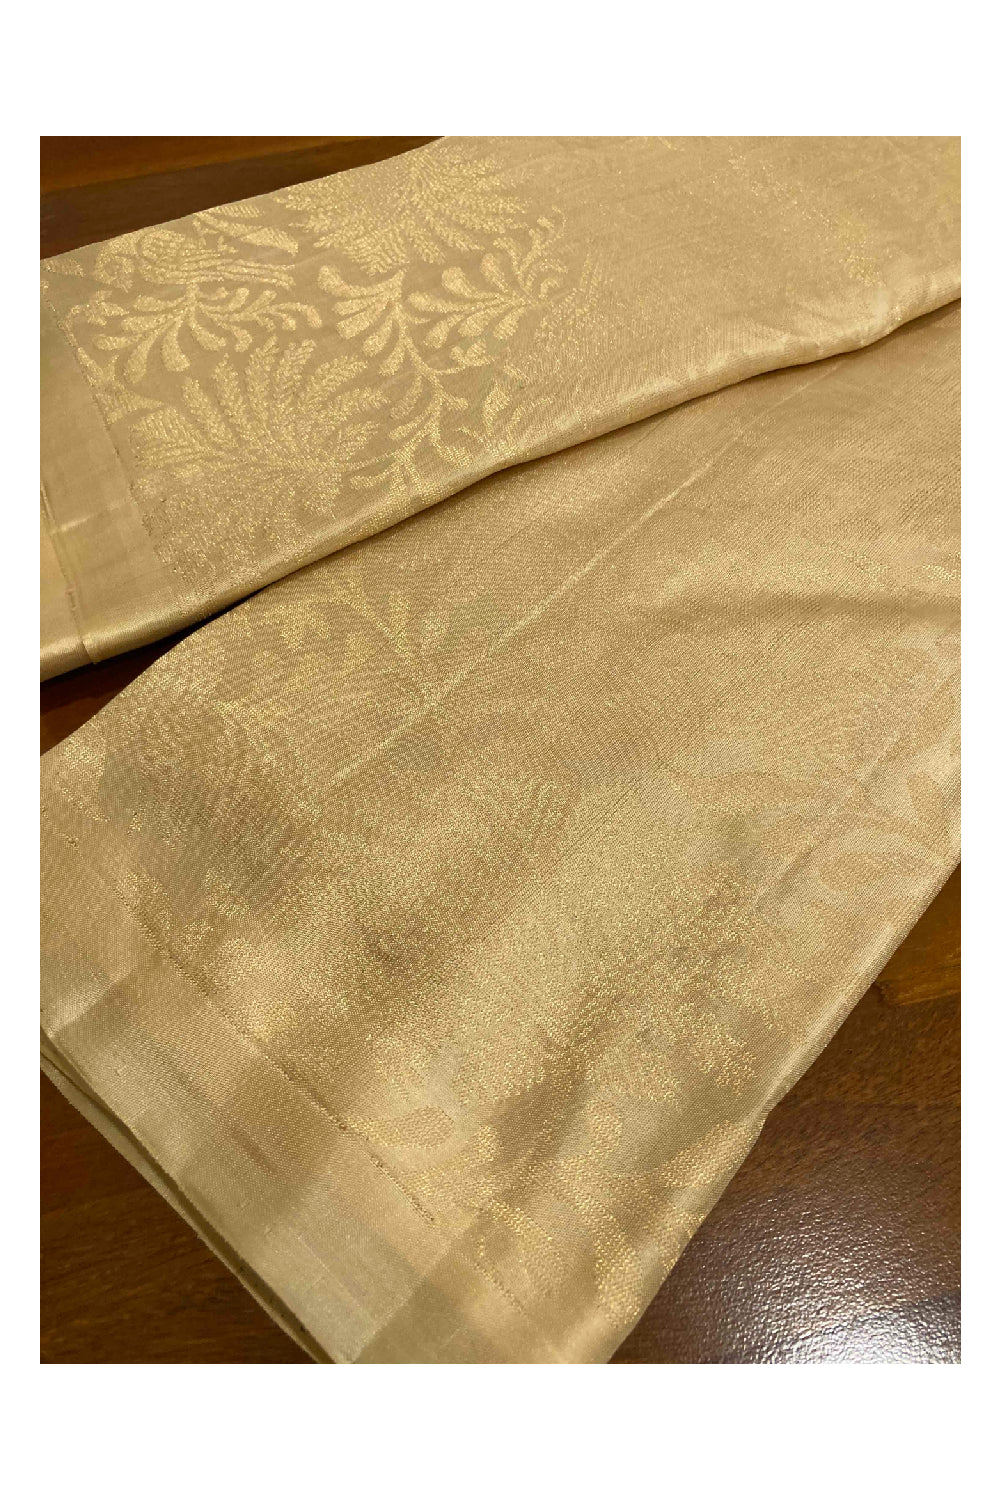 Southloom Handloom Pure Silk Manthrakodi Kanchipuram Saree in Single Beige Colour and Silver Zari Motifs